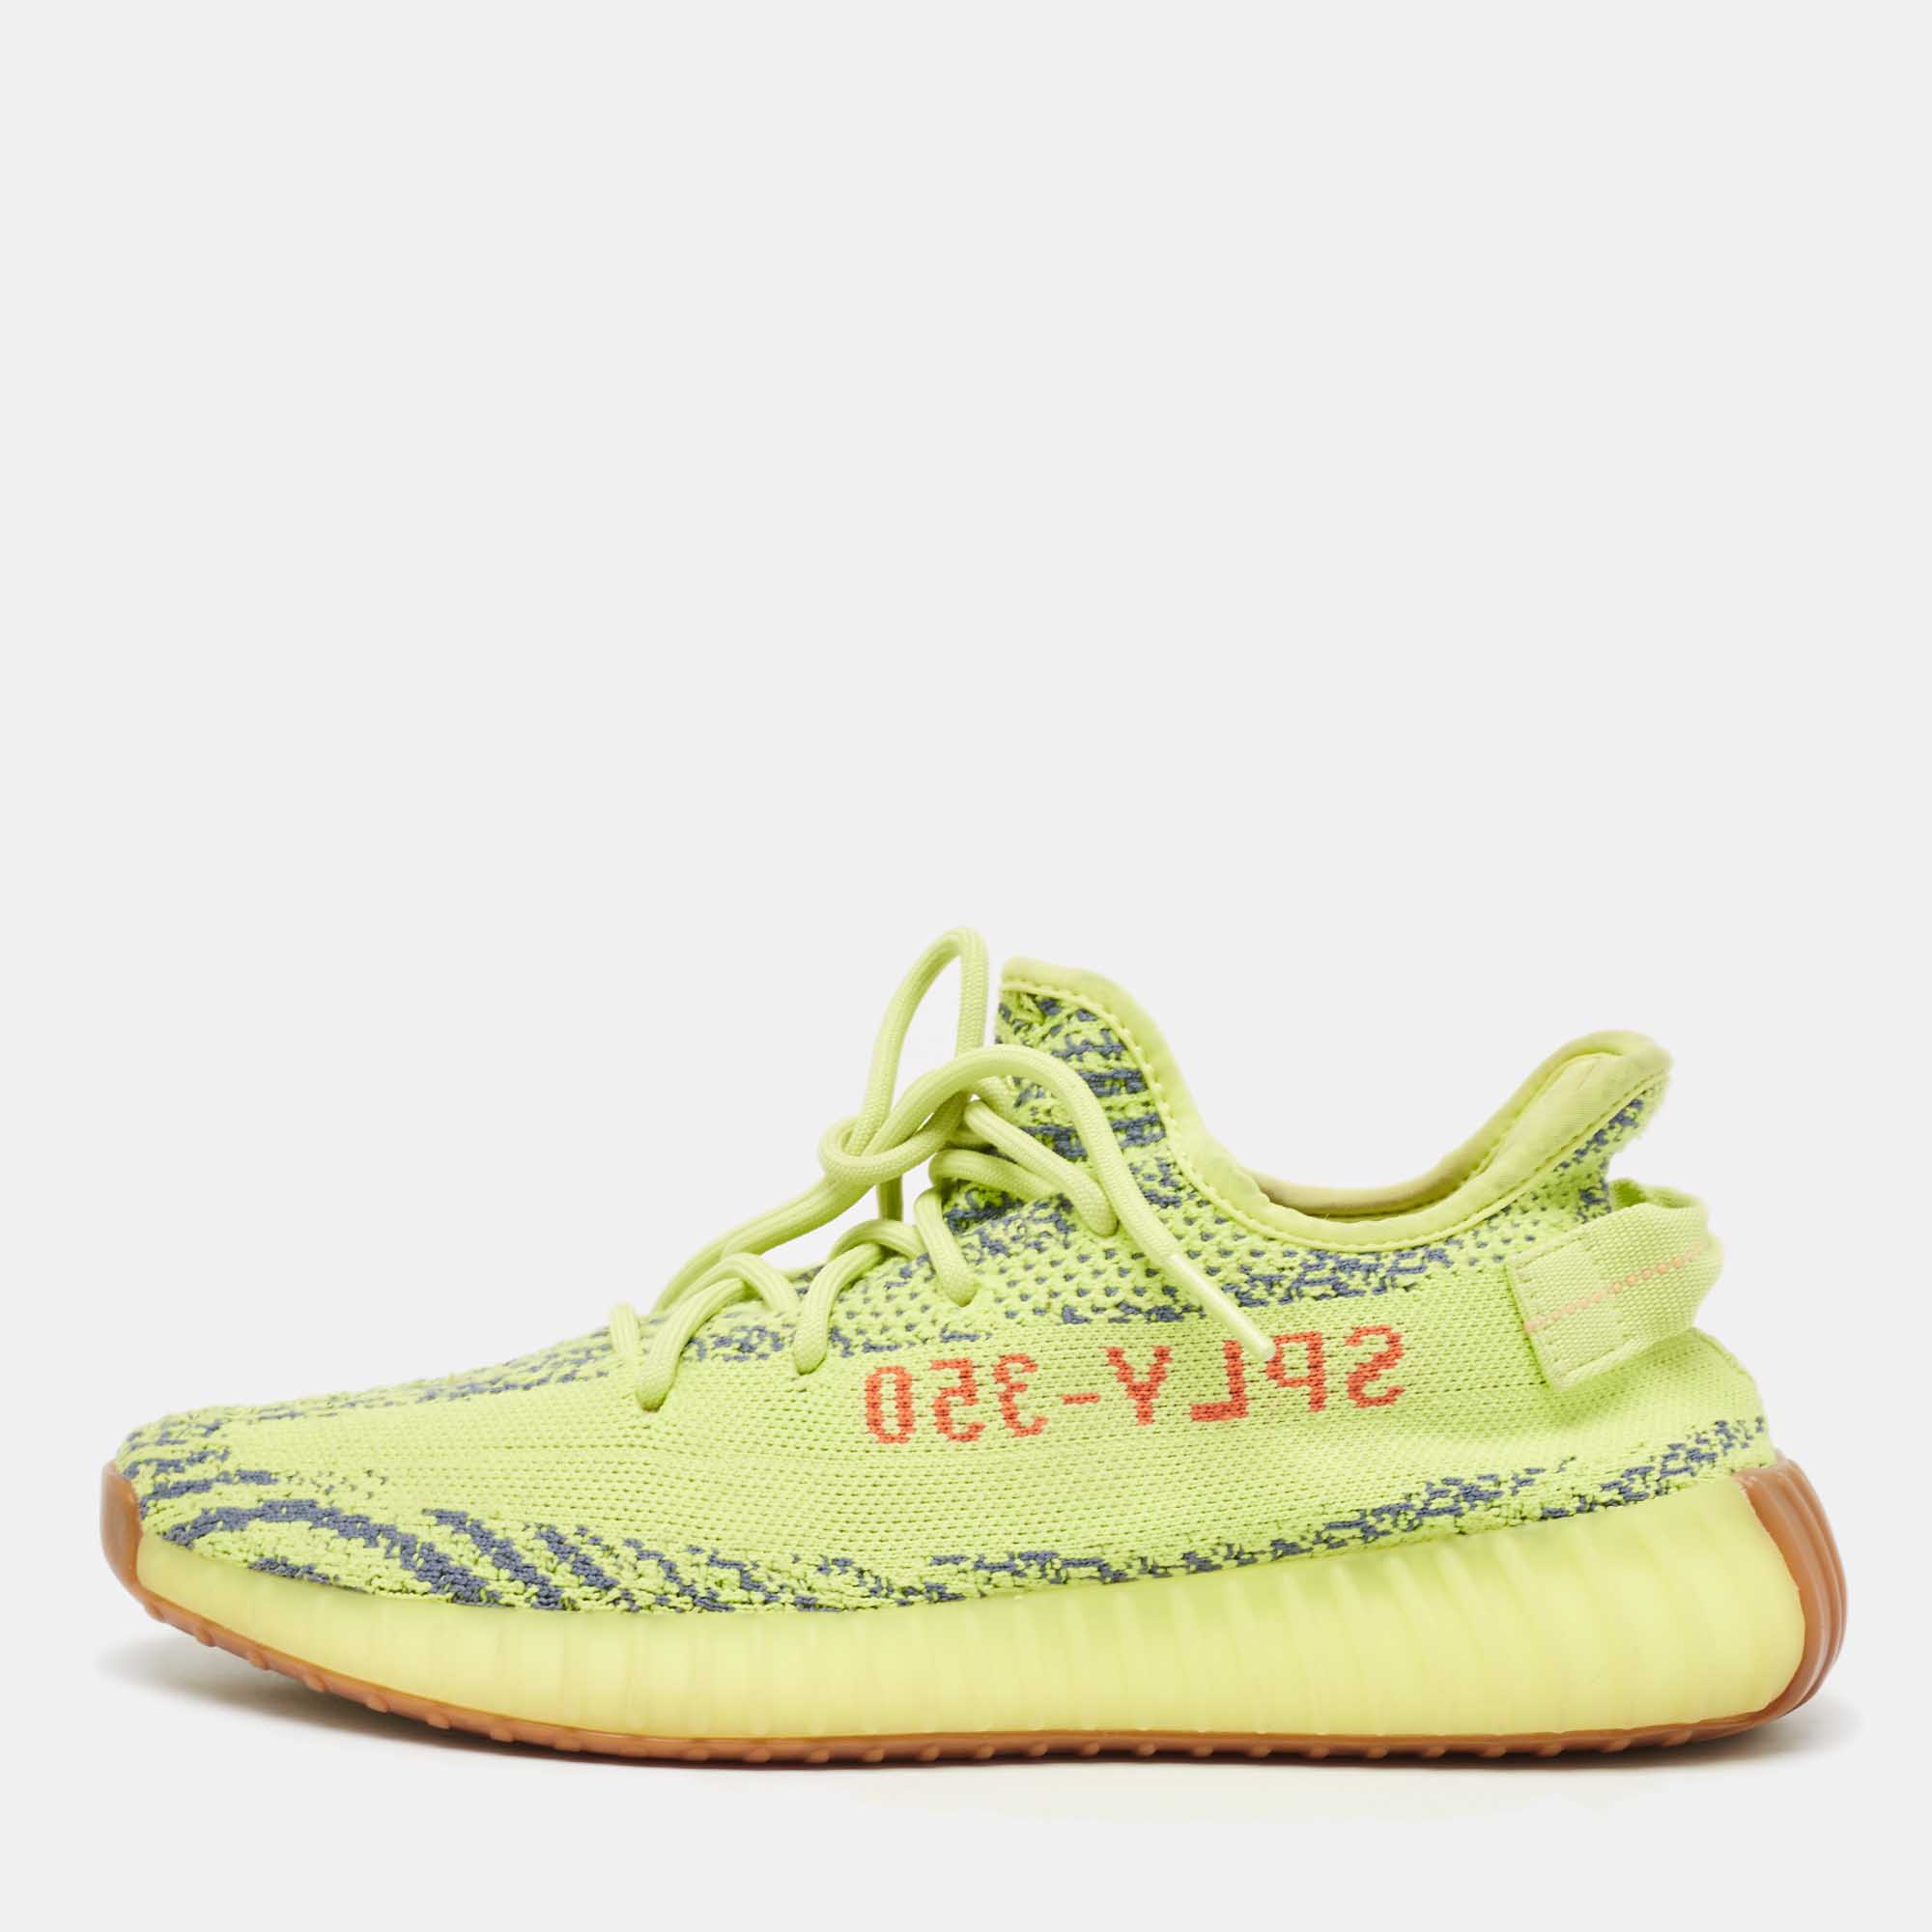 

Yeezy x Adidas Neon Yellow Knit Fabric Boost 350 V2 Semi Frozen Yellow Sneakers Size 42 2/3, Green